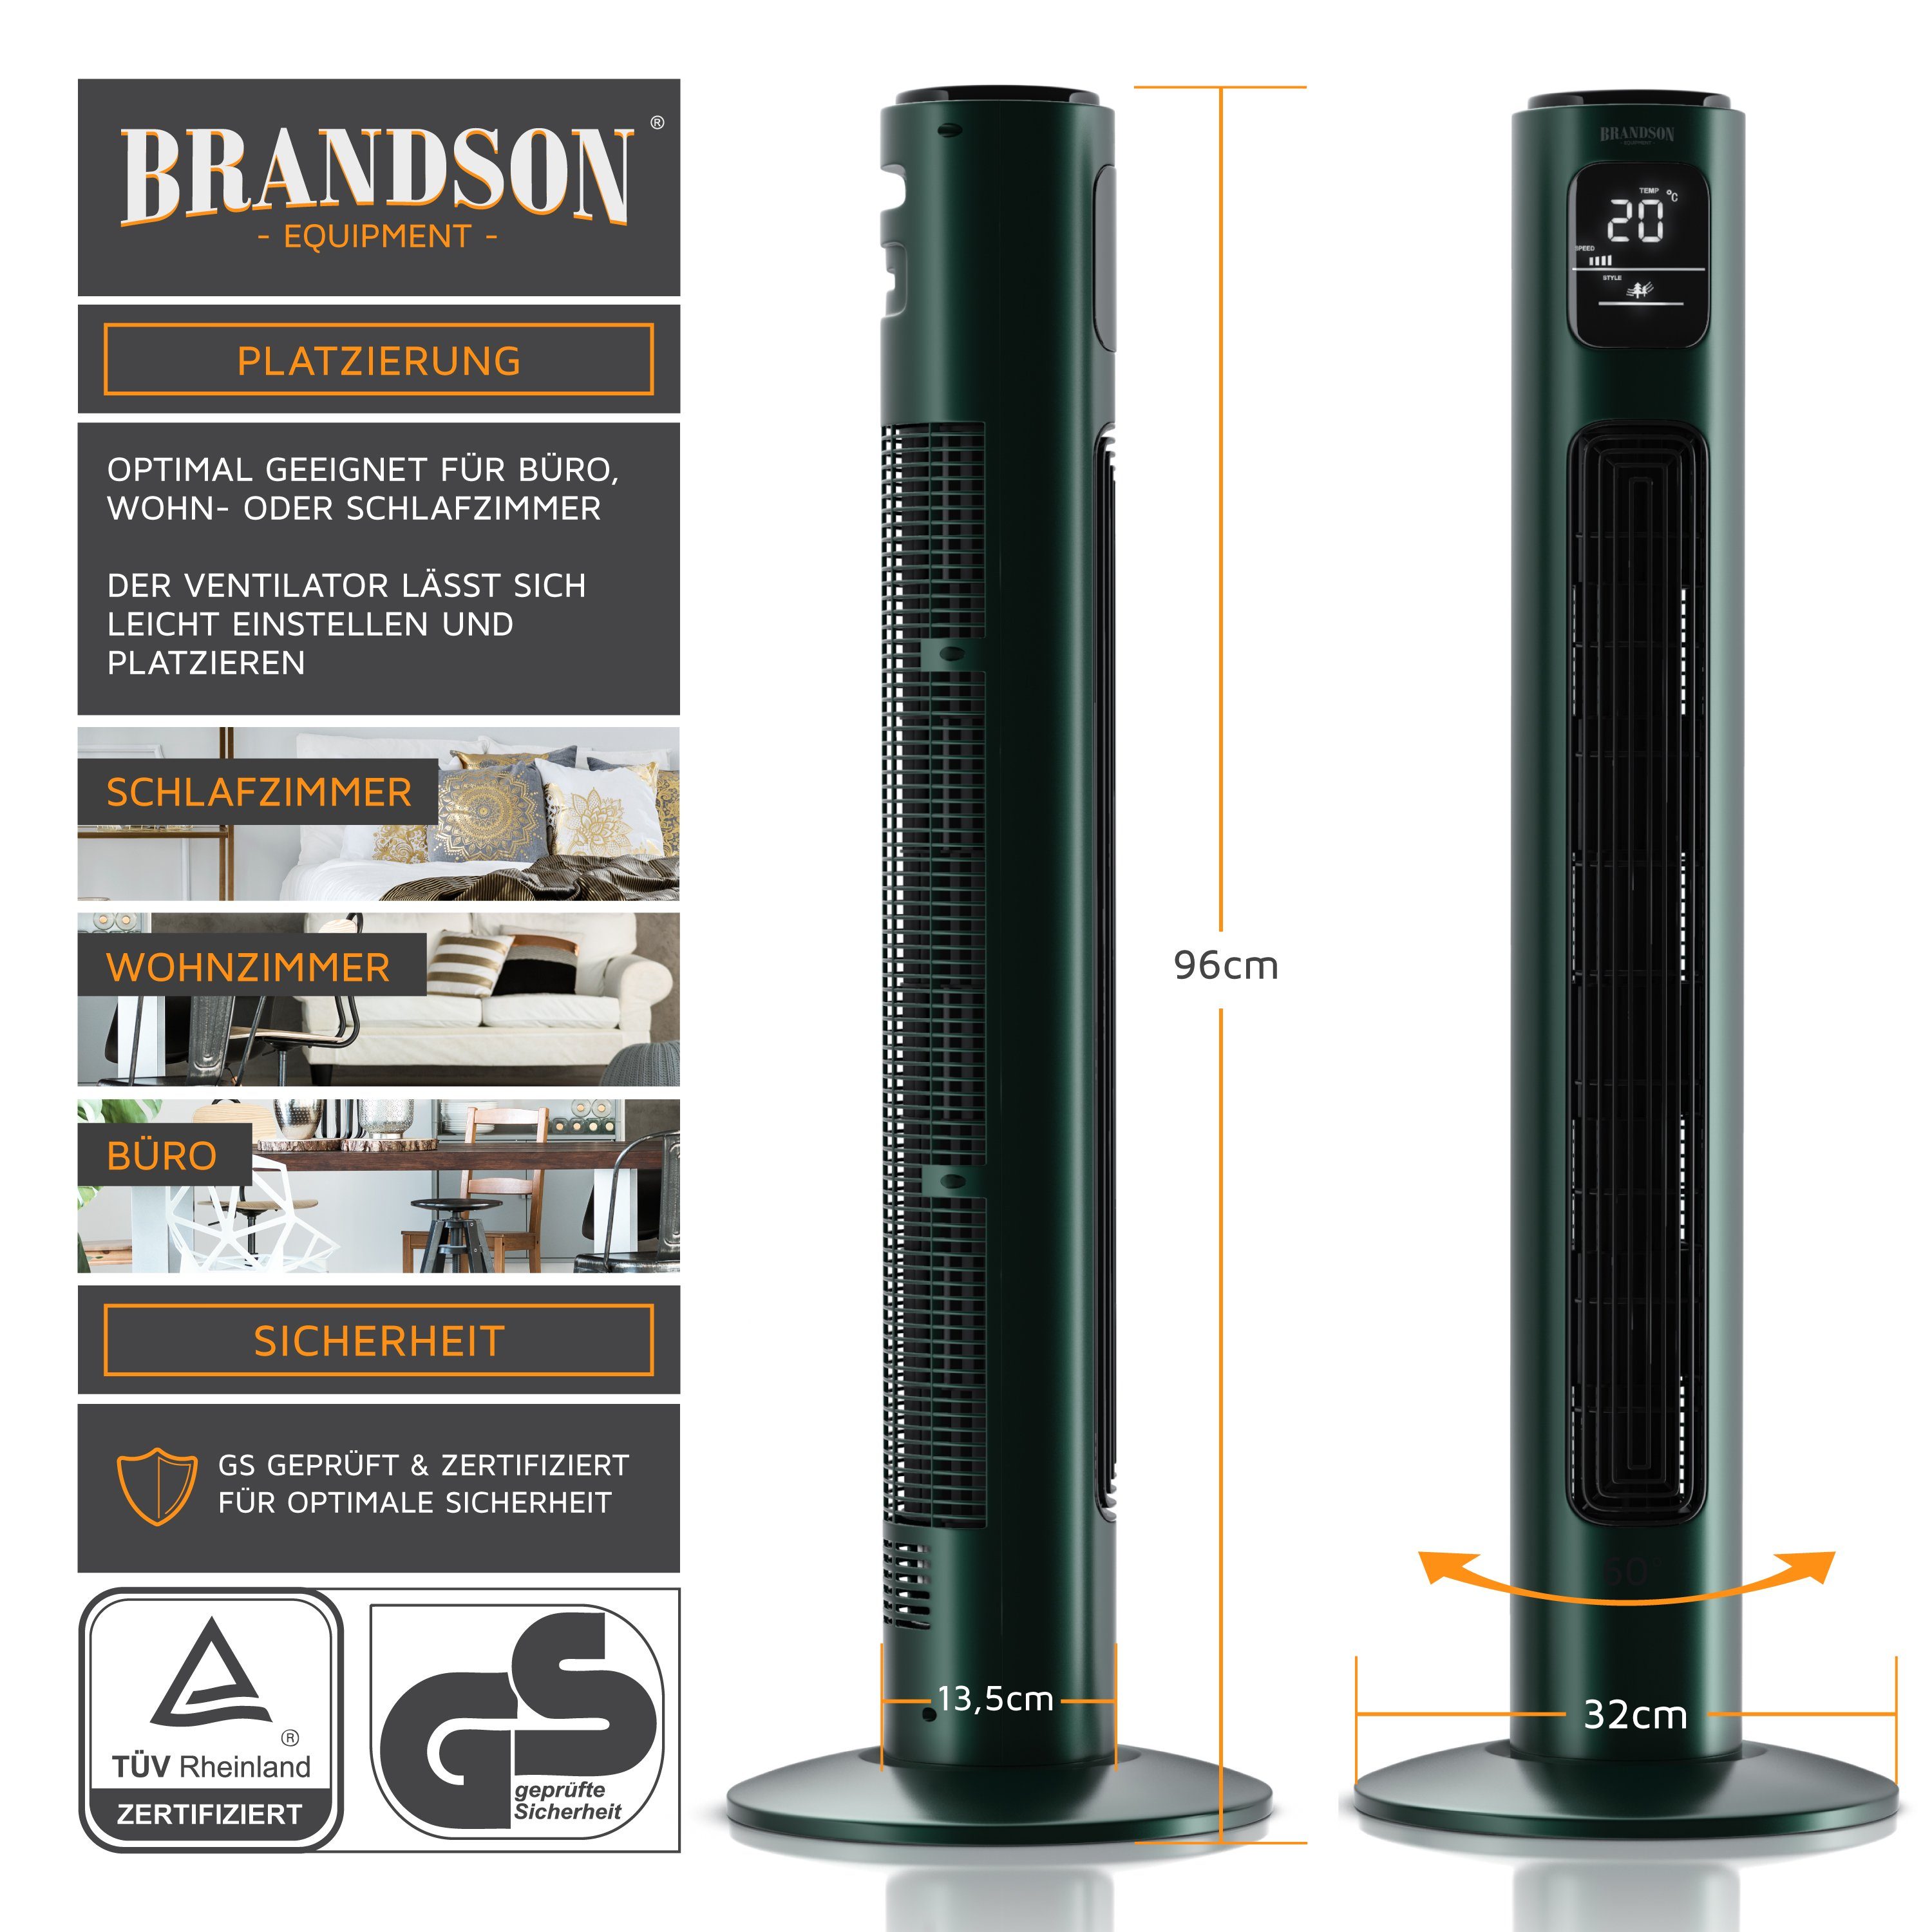 Turmventilator, Green Brandson 96cm, Racing Standventilator Oszillation, Fernbedienung, Timer,